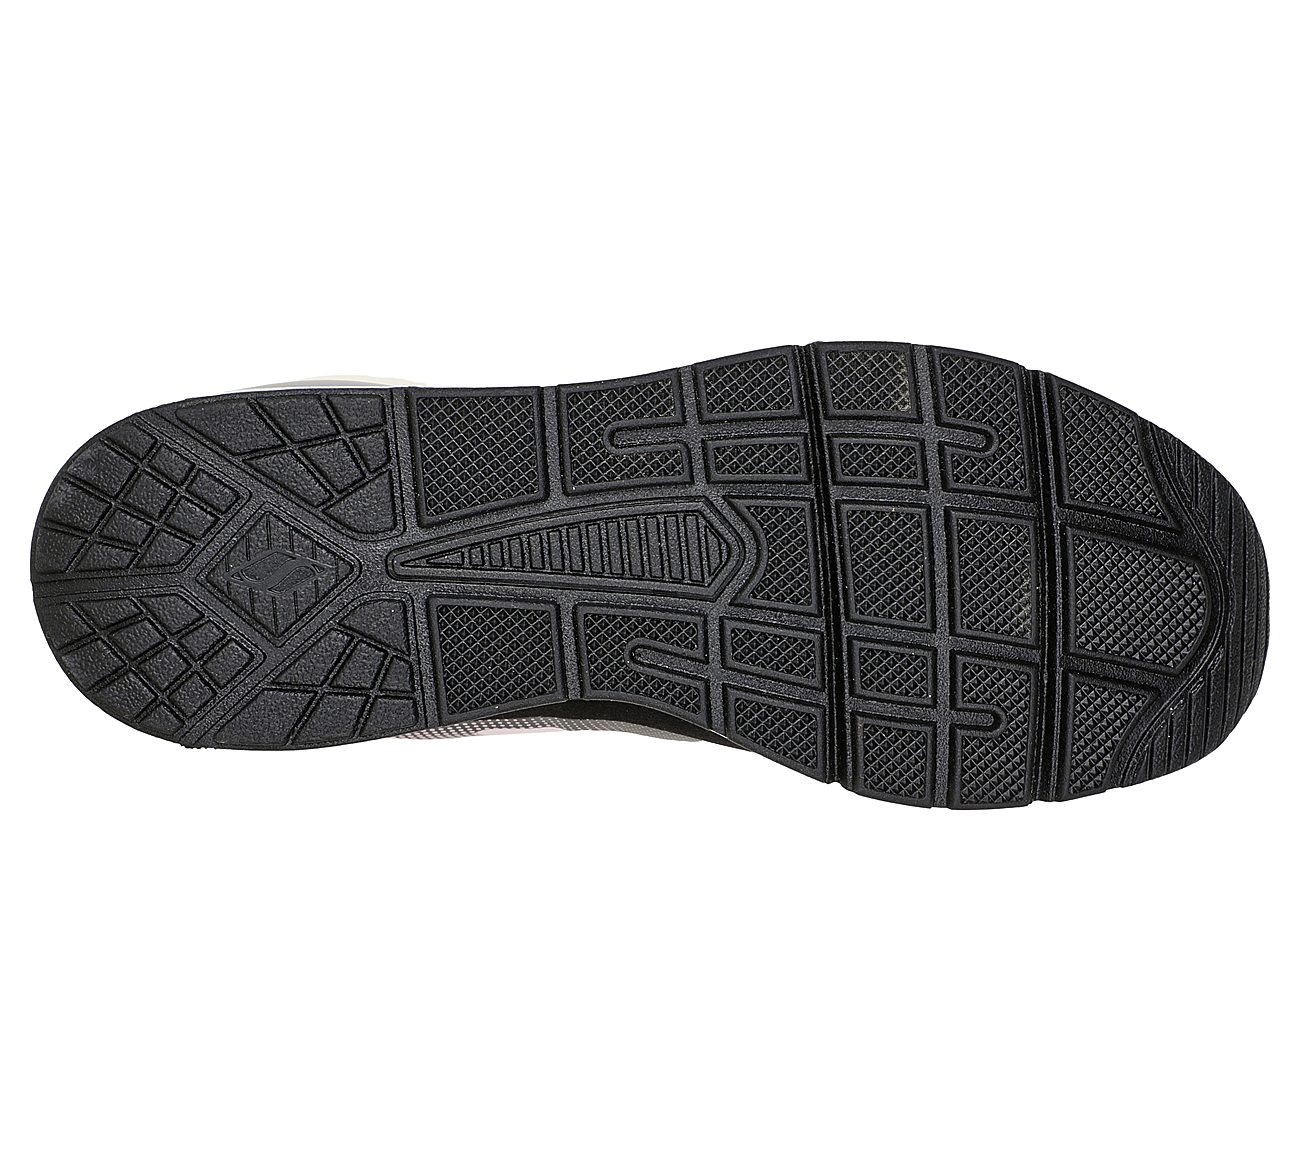 UNO 2 - MAD AIR, BLACK/LIGHT PINK Footwear Bottom View